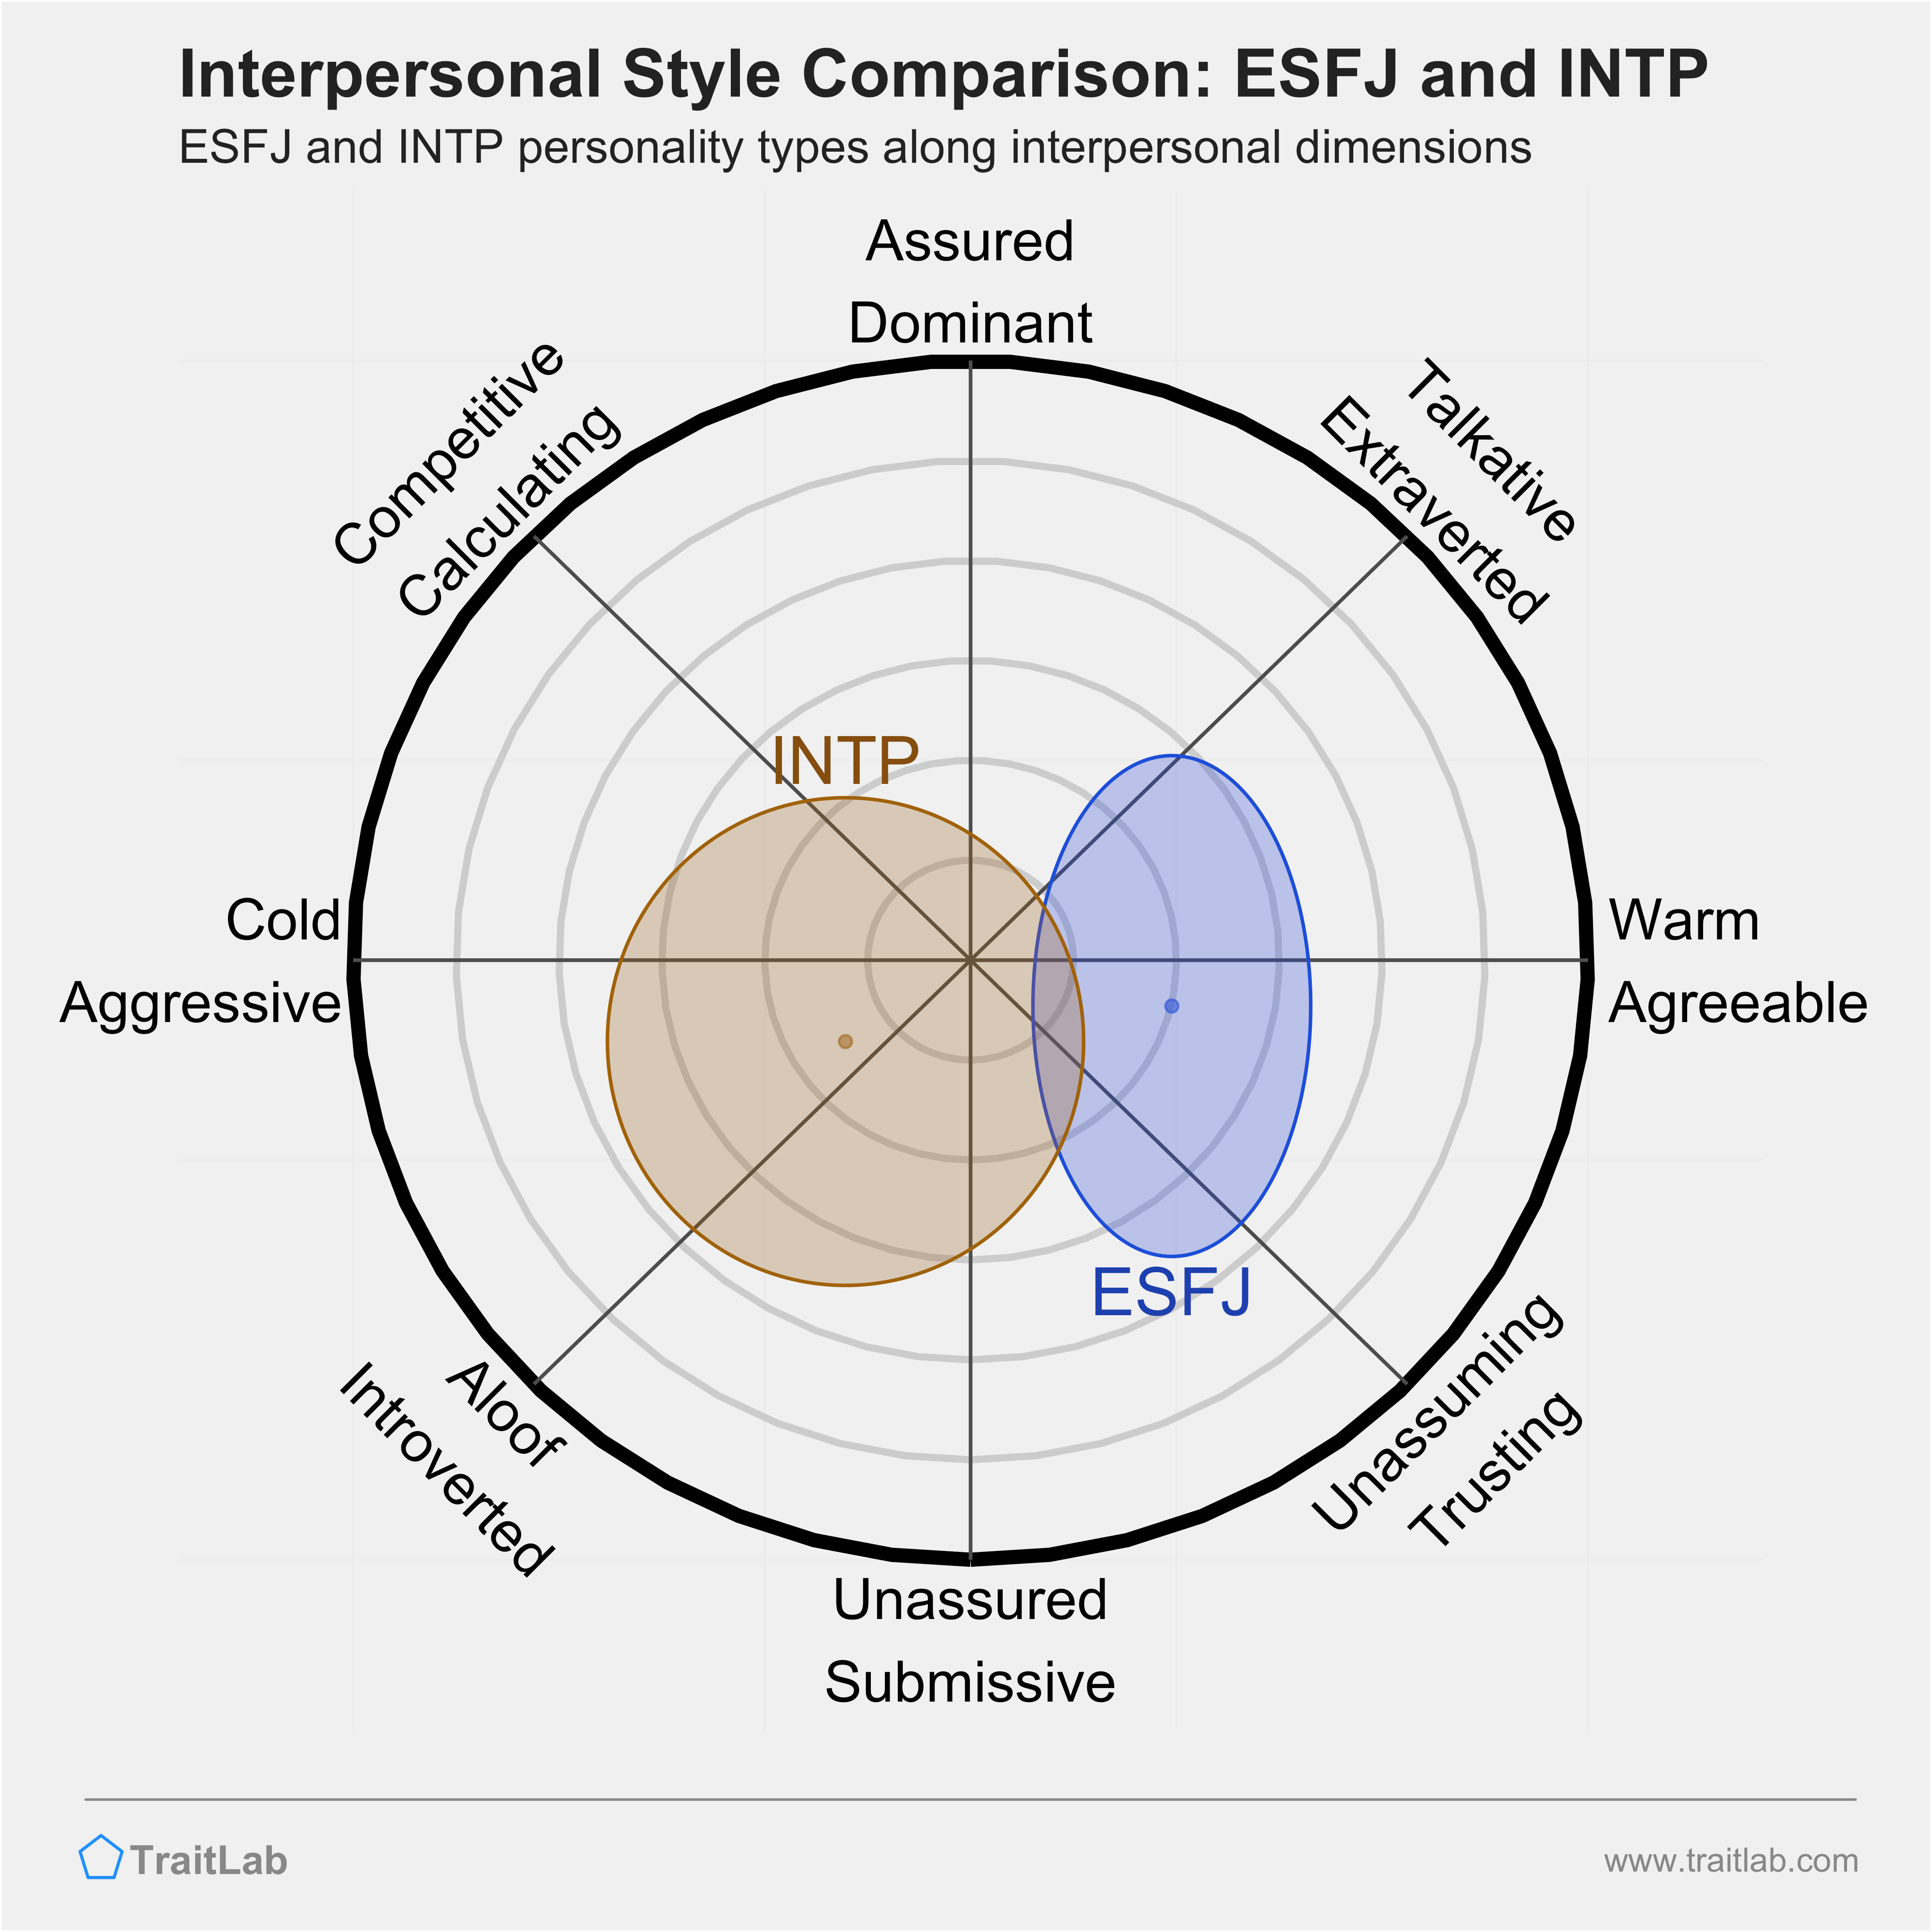 ESFJ and INTP comparison across interpersonal dimensions